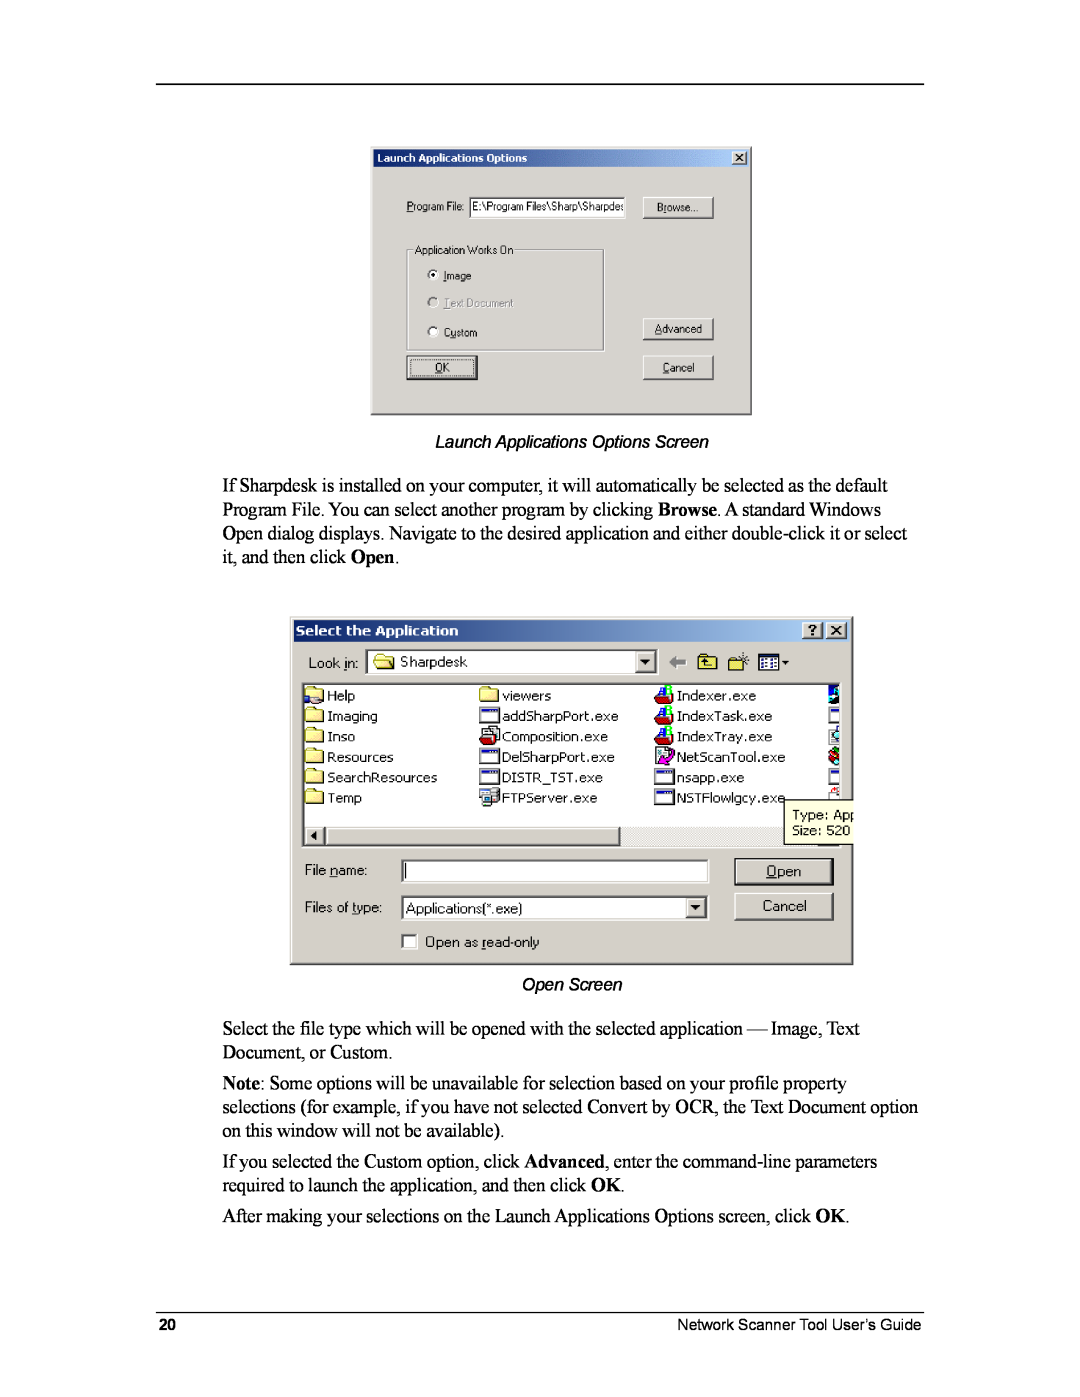 Sharp R3.1 manual Launch Applications Options Screen, Open Screen 